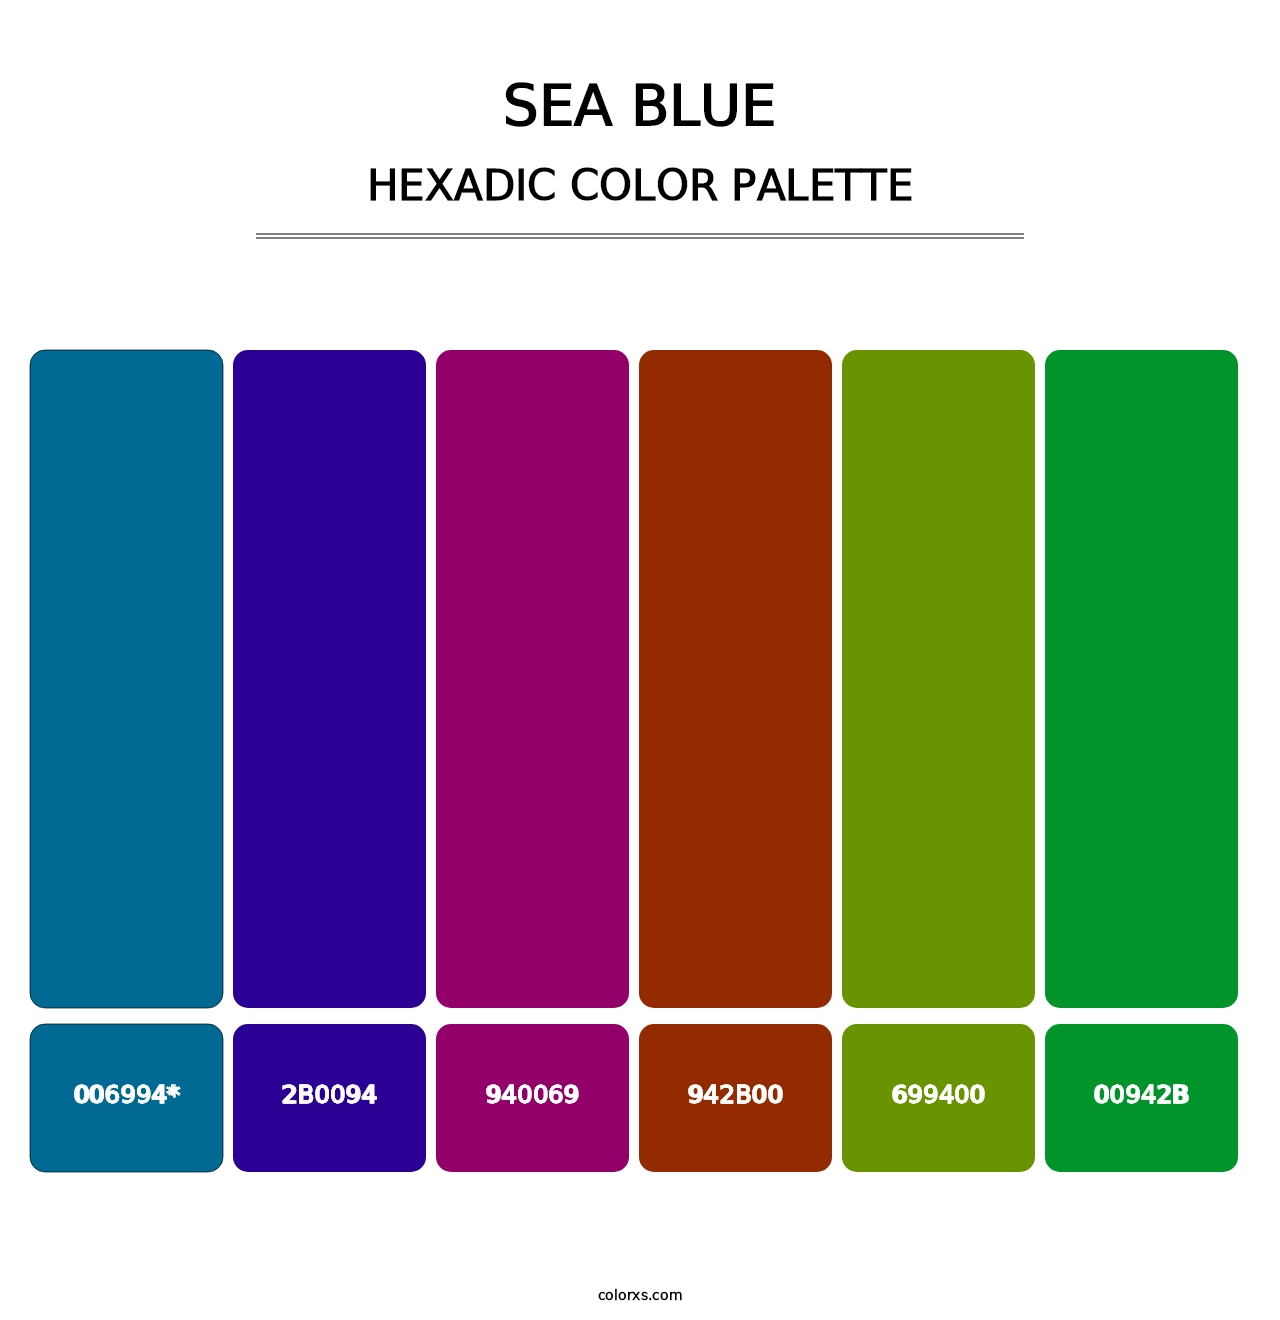 Sea Blue - Hexadic Color Palette